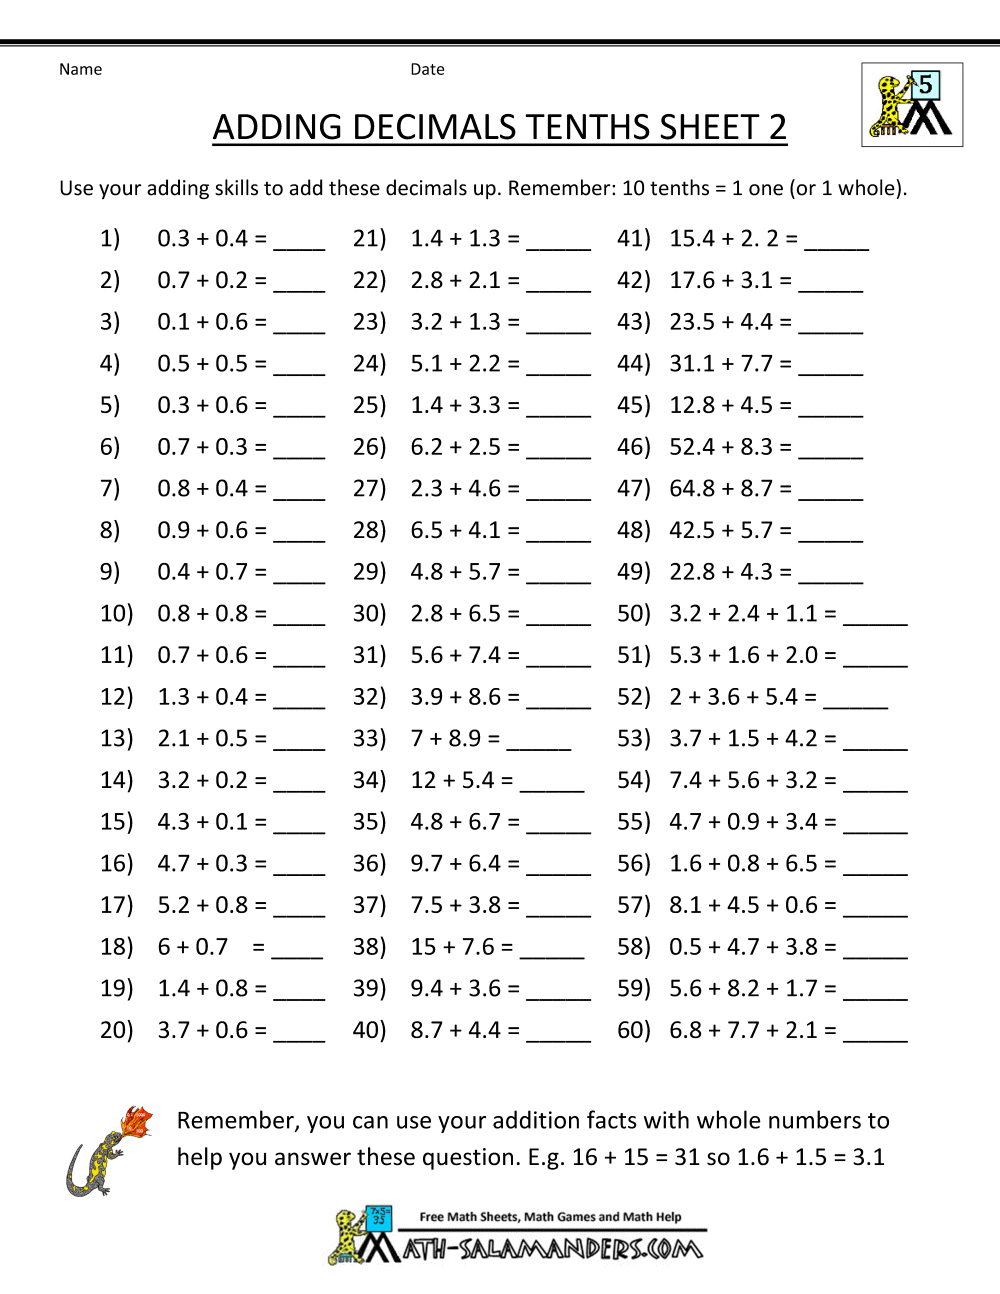 decimal-math-worksheets-adding-decimals-tenths-2-gif-1000-1294-free-math-worksheets-mental